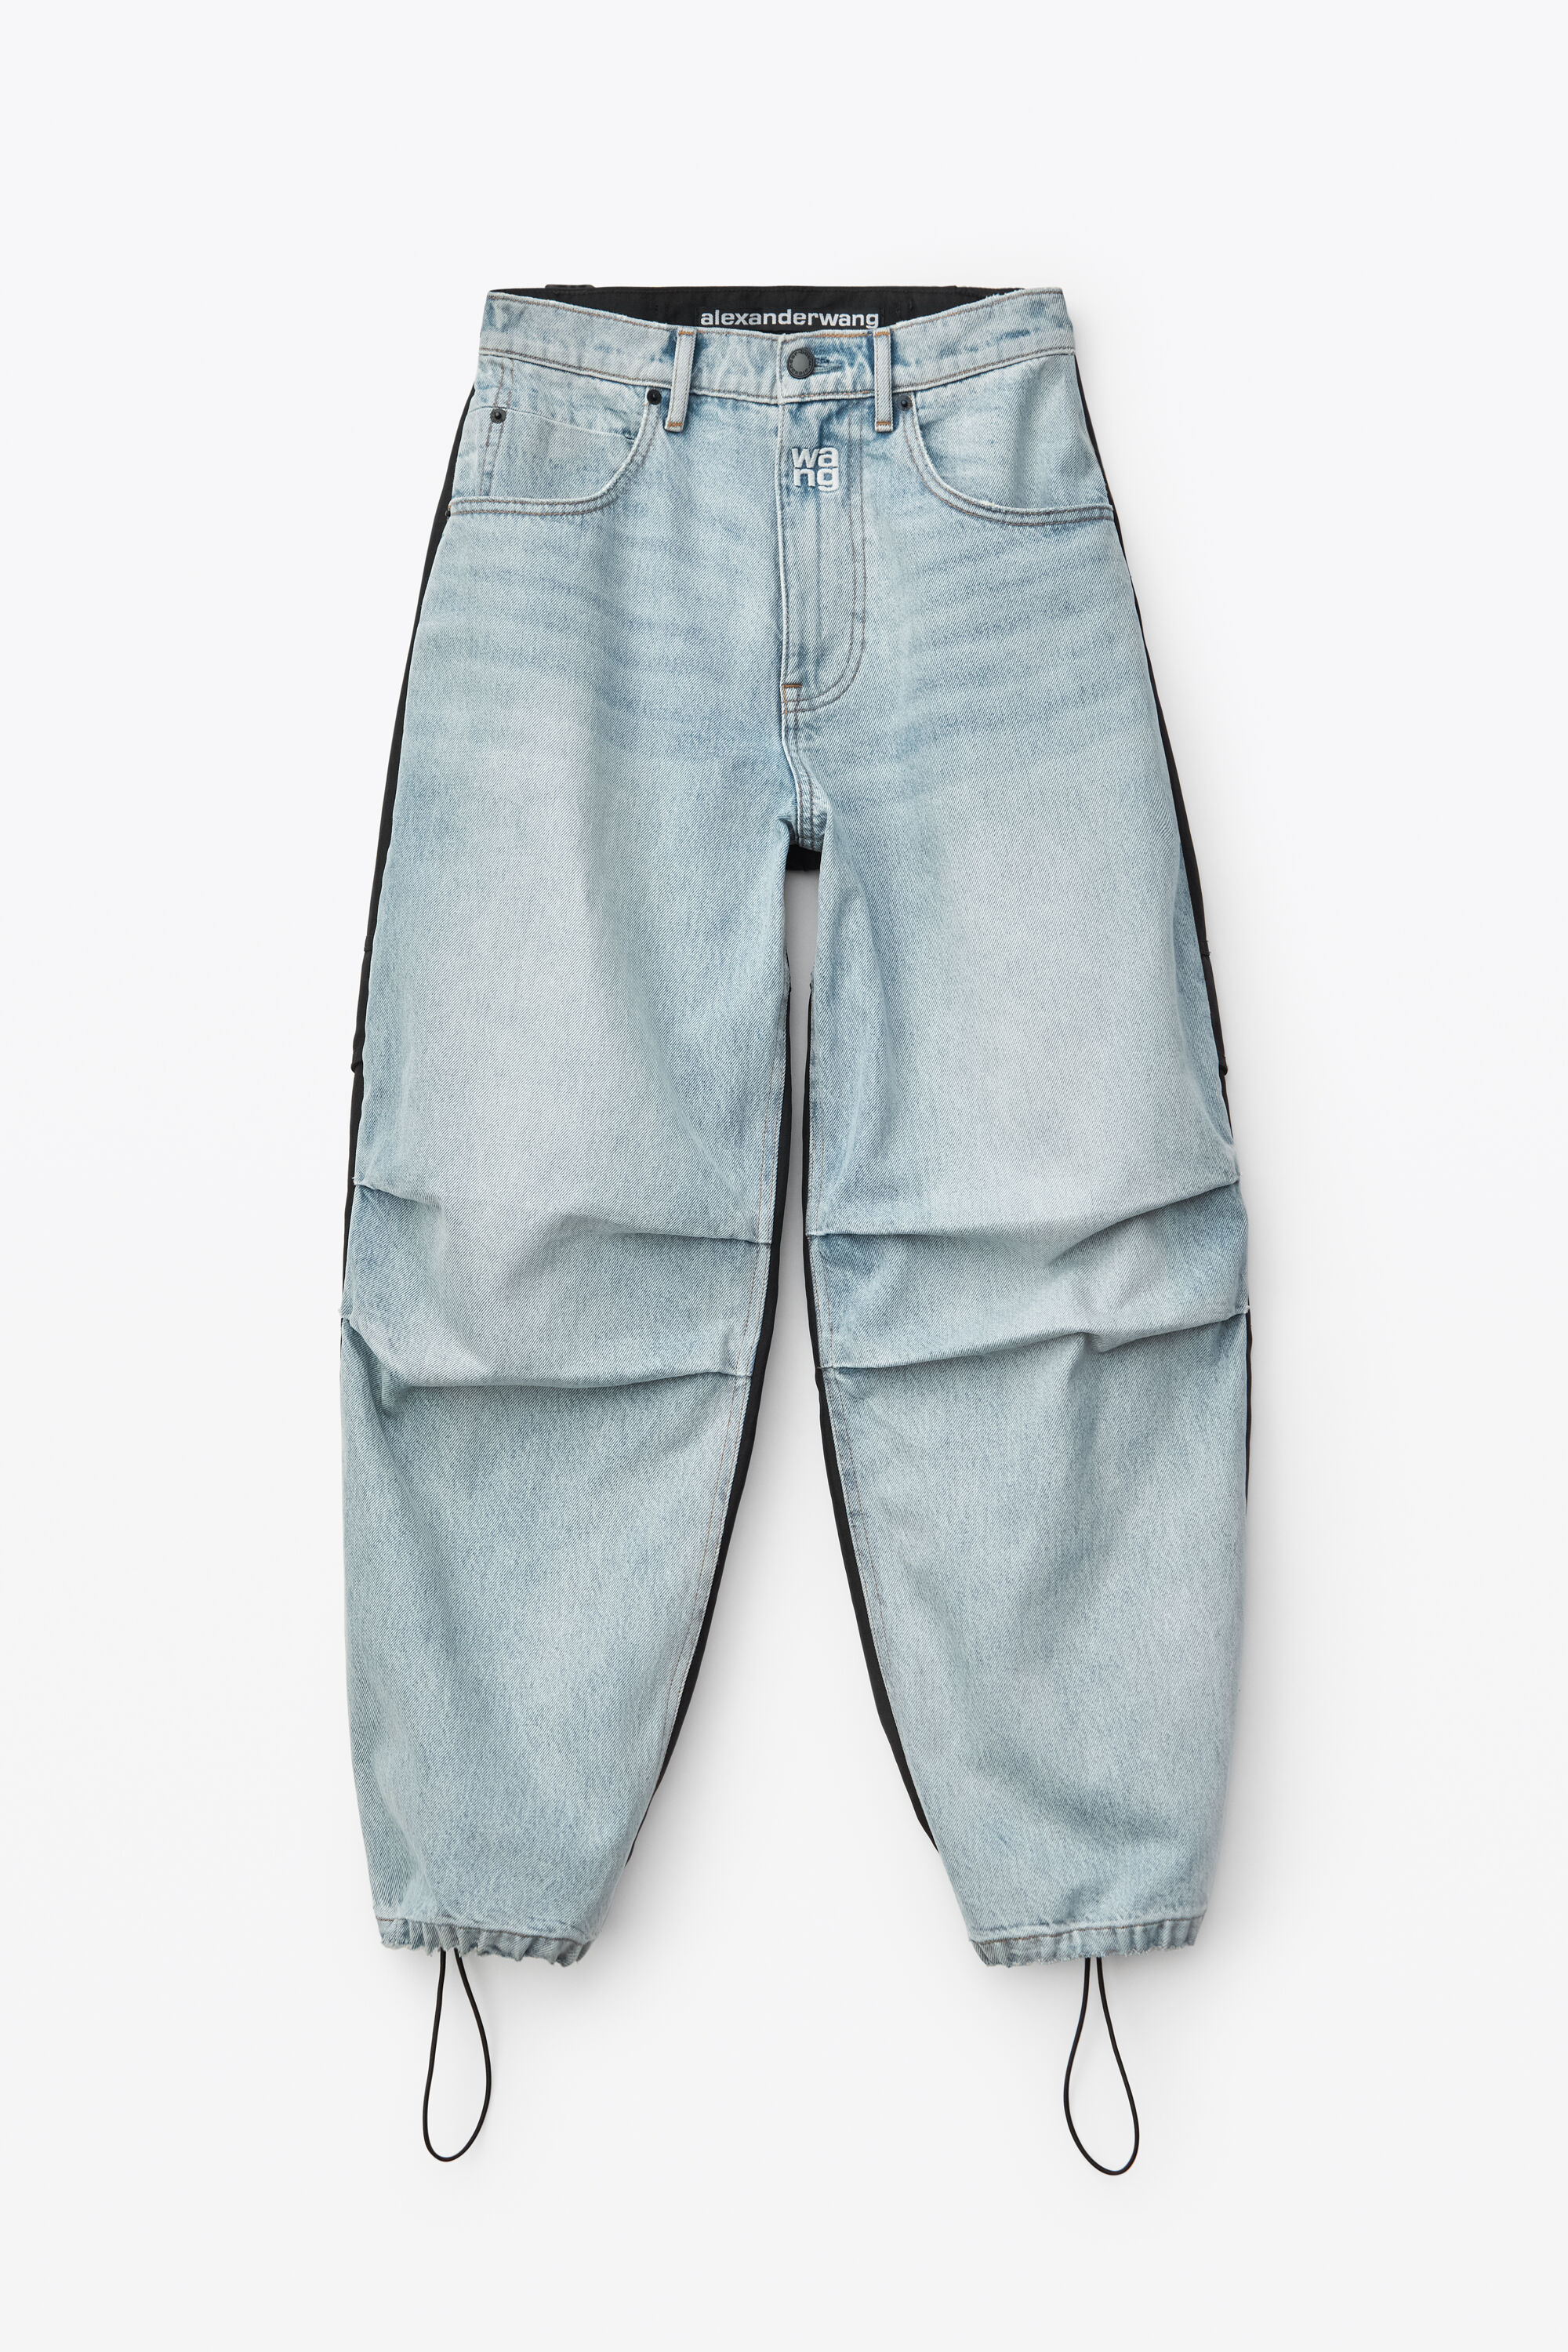 alexander wang jeans sale